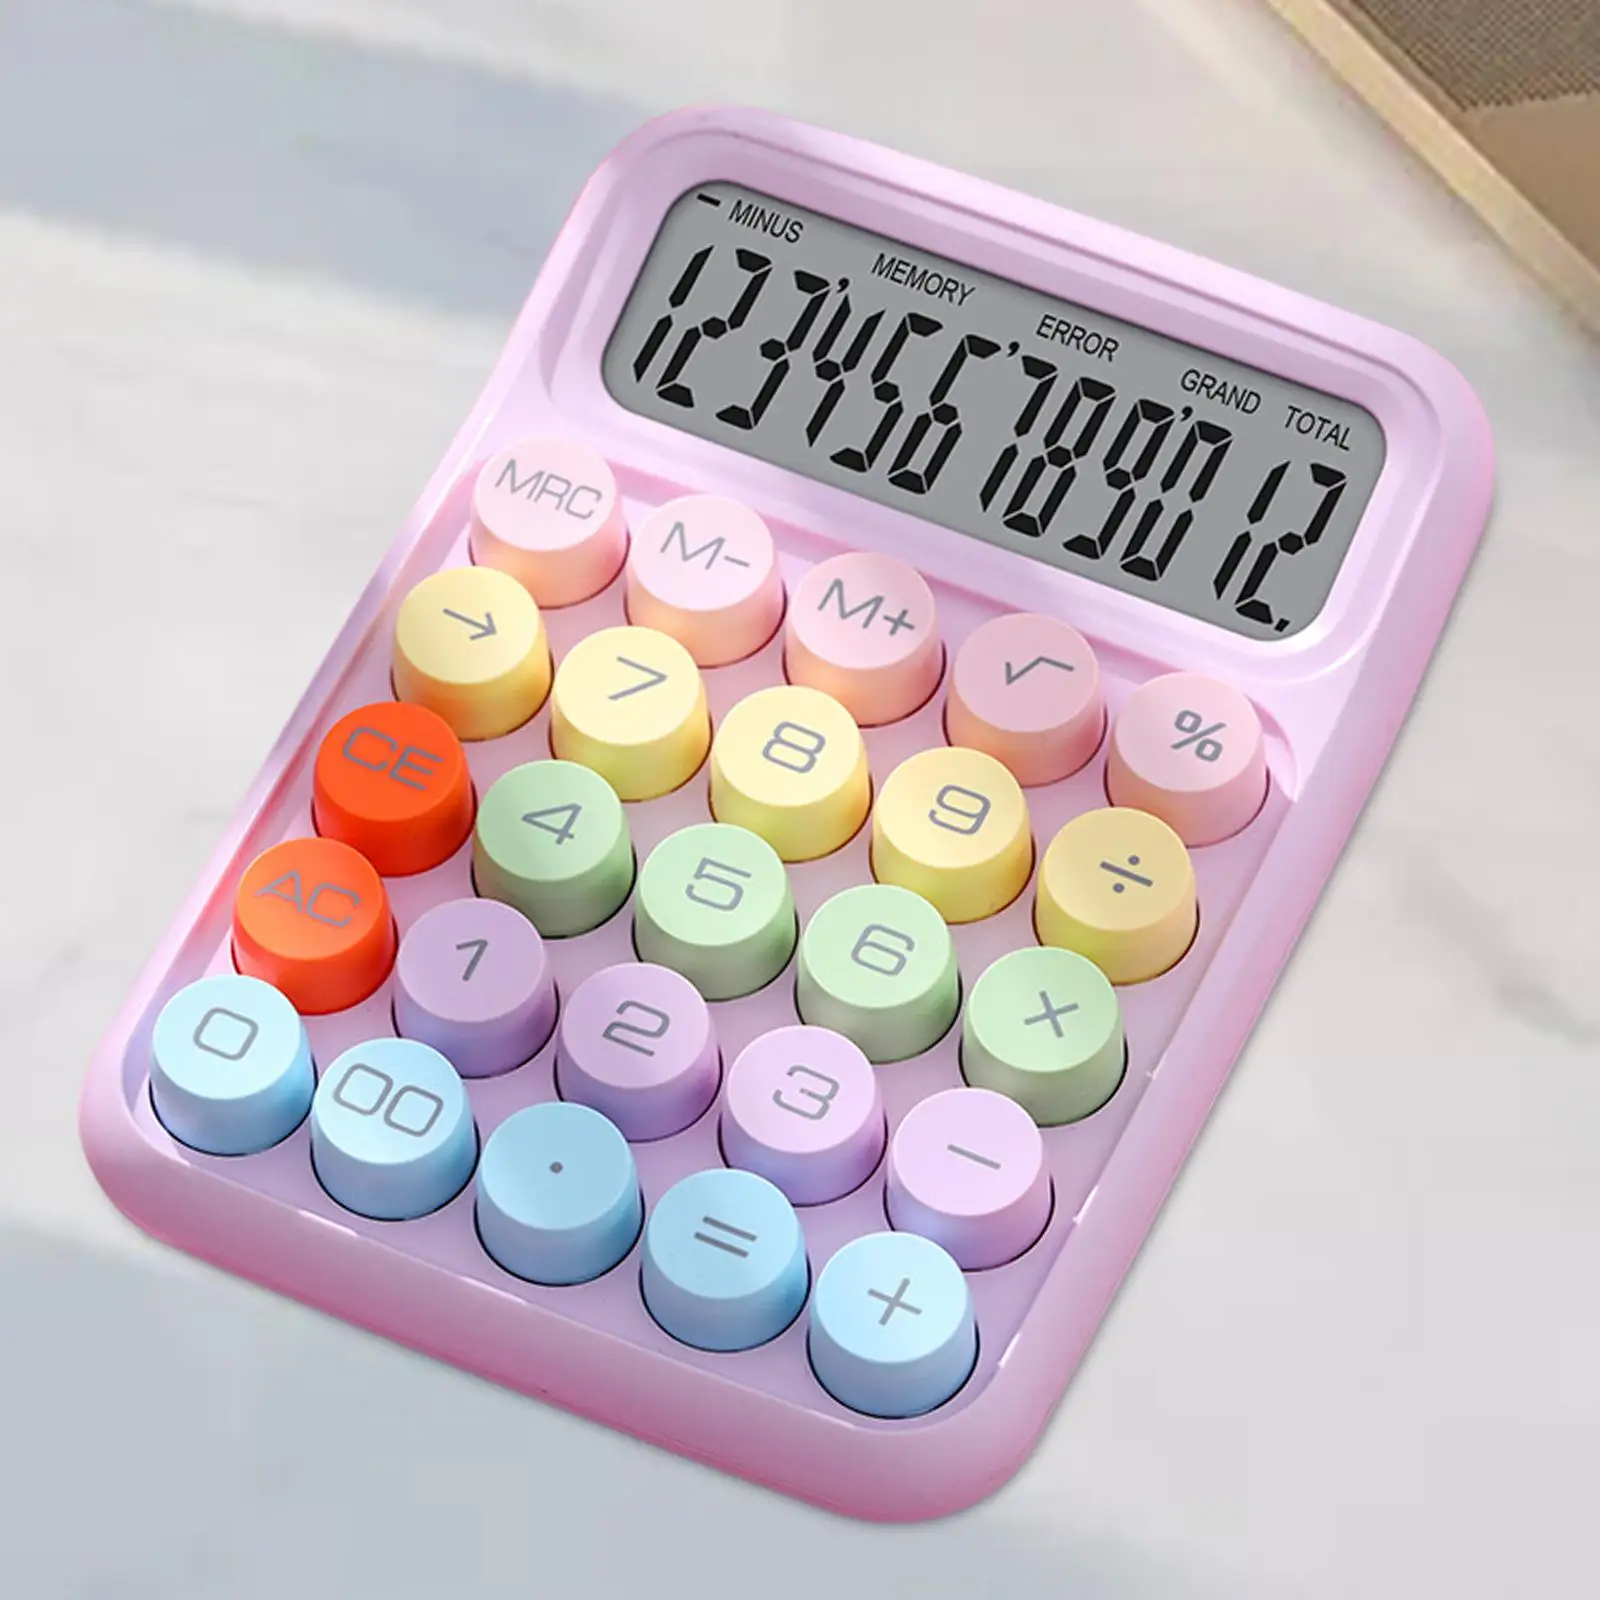 12Digit Calculator with Non Slip Mat Mechanical Button Calculator Desktop Calculator Office Calculator for Business Class Office